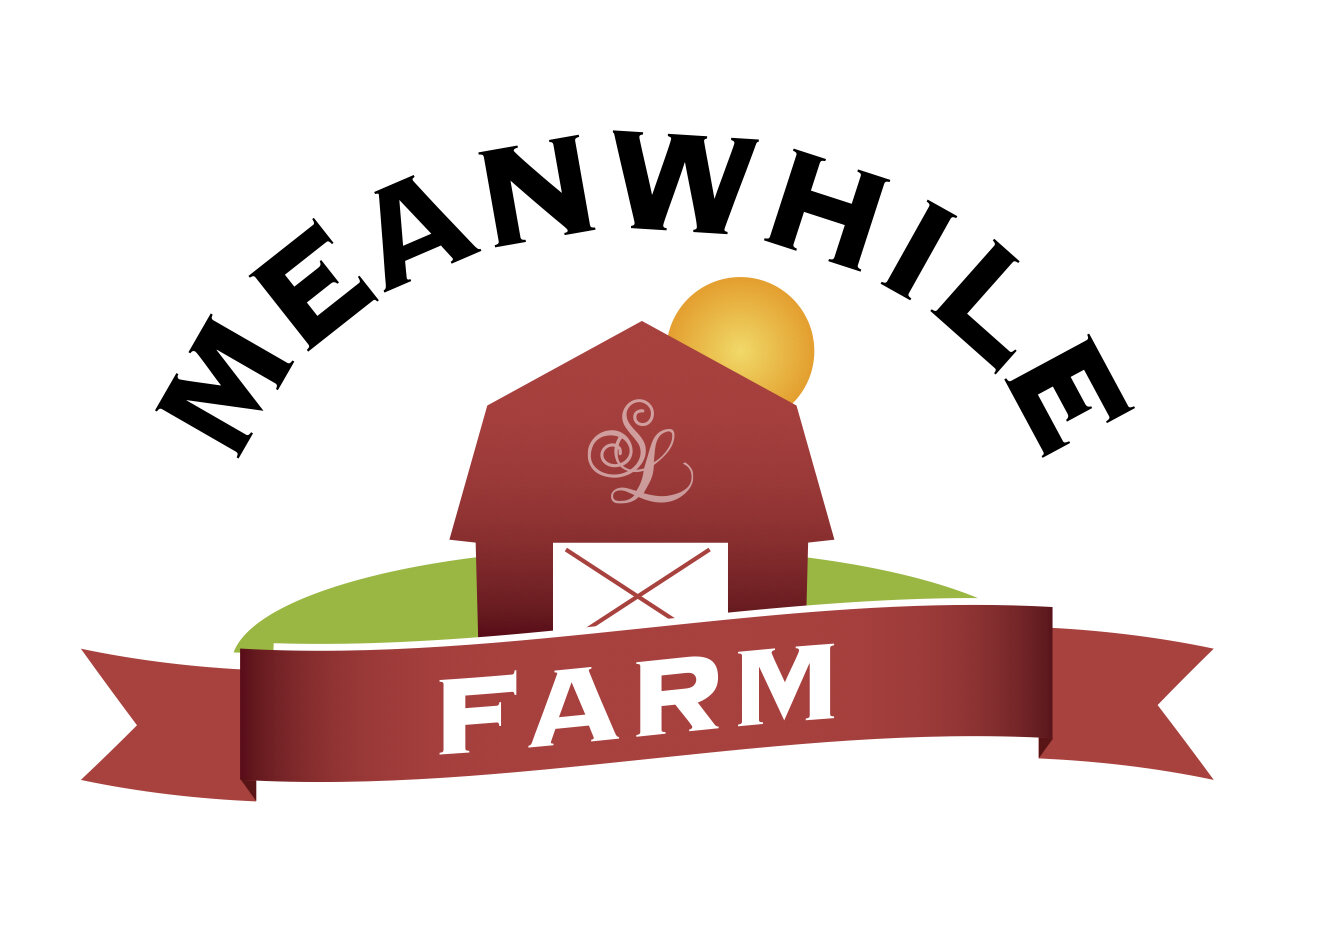 Meanwhile Farm